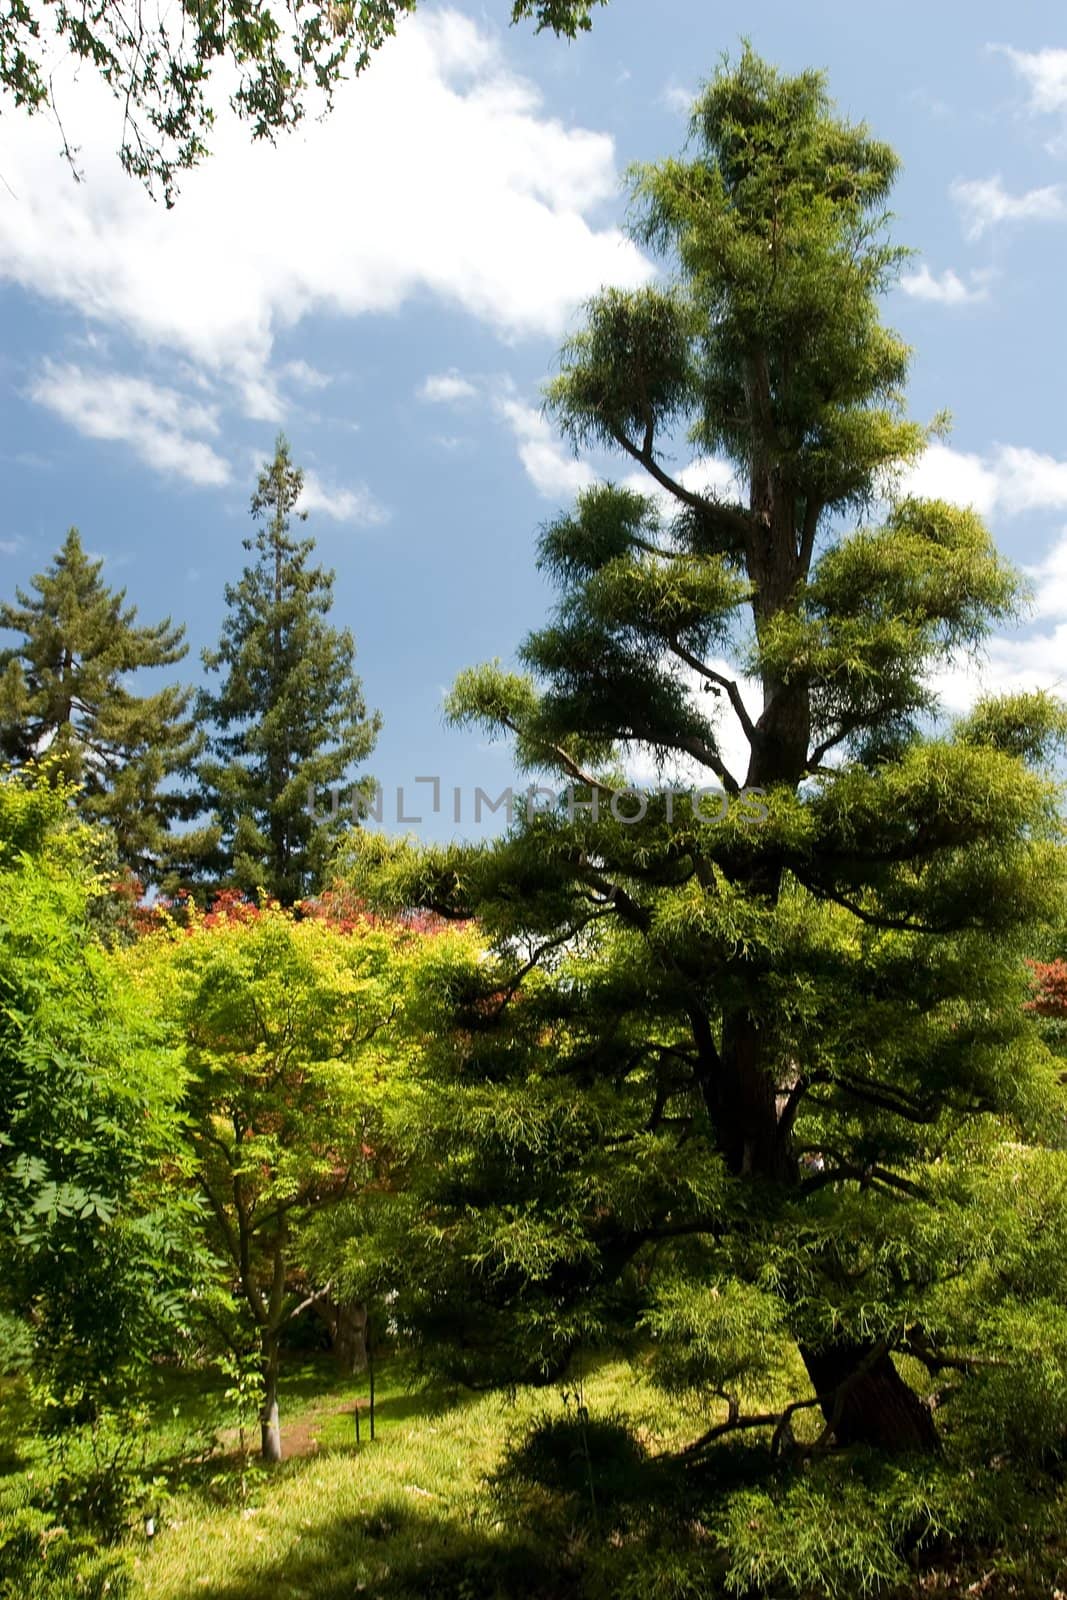 A traditional Japanese garden in California.